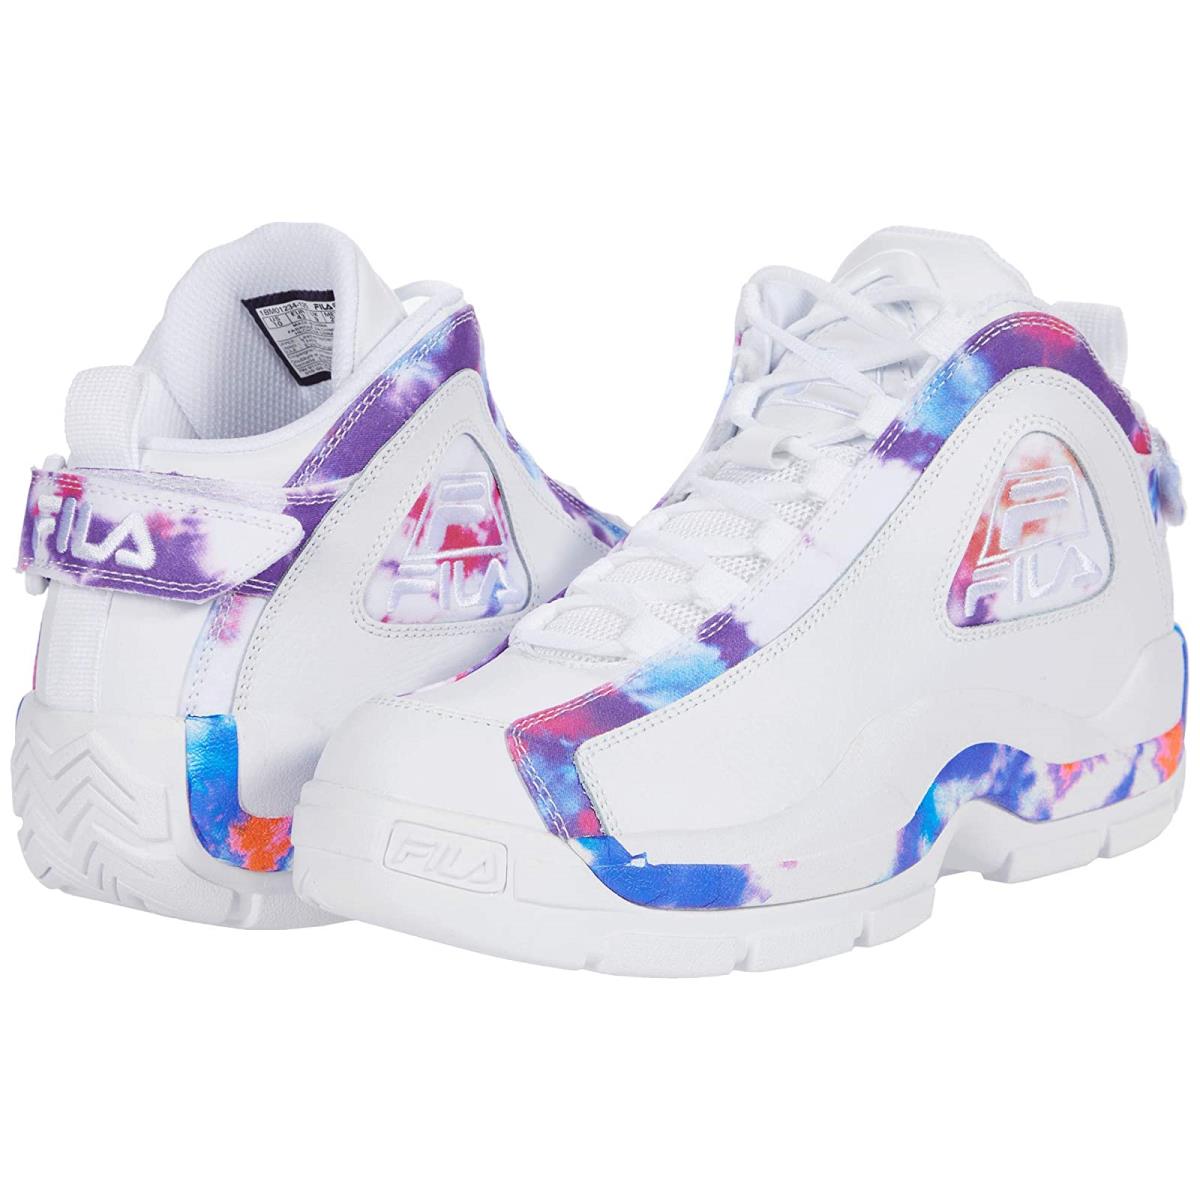 Man`s Sneakers Athletic Shoes Fila Grant Hill 2 Tie-dye White/White/Tie-Dye